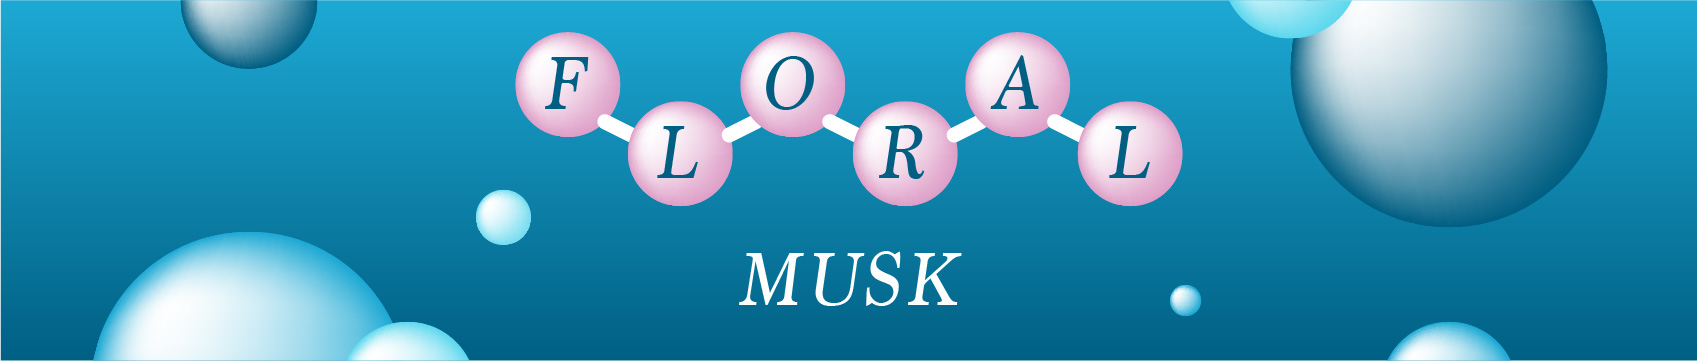 illustration of molecules floral musk